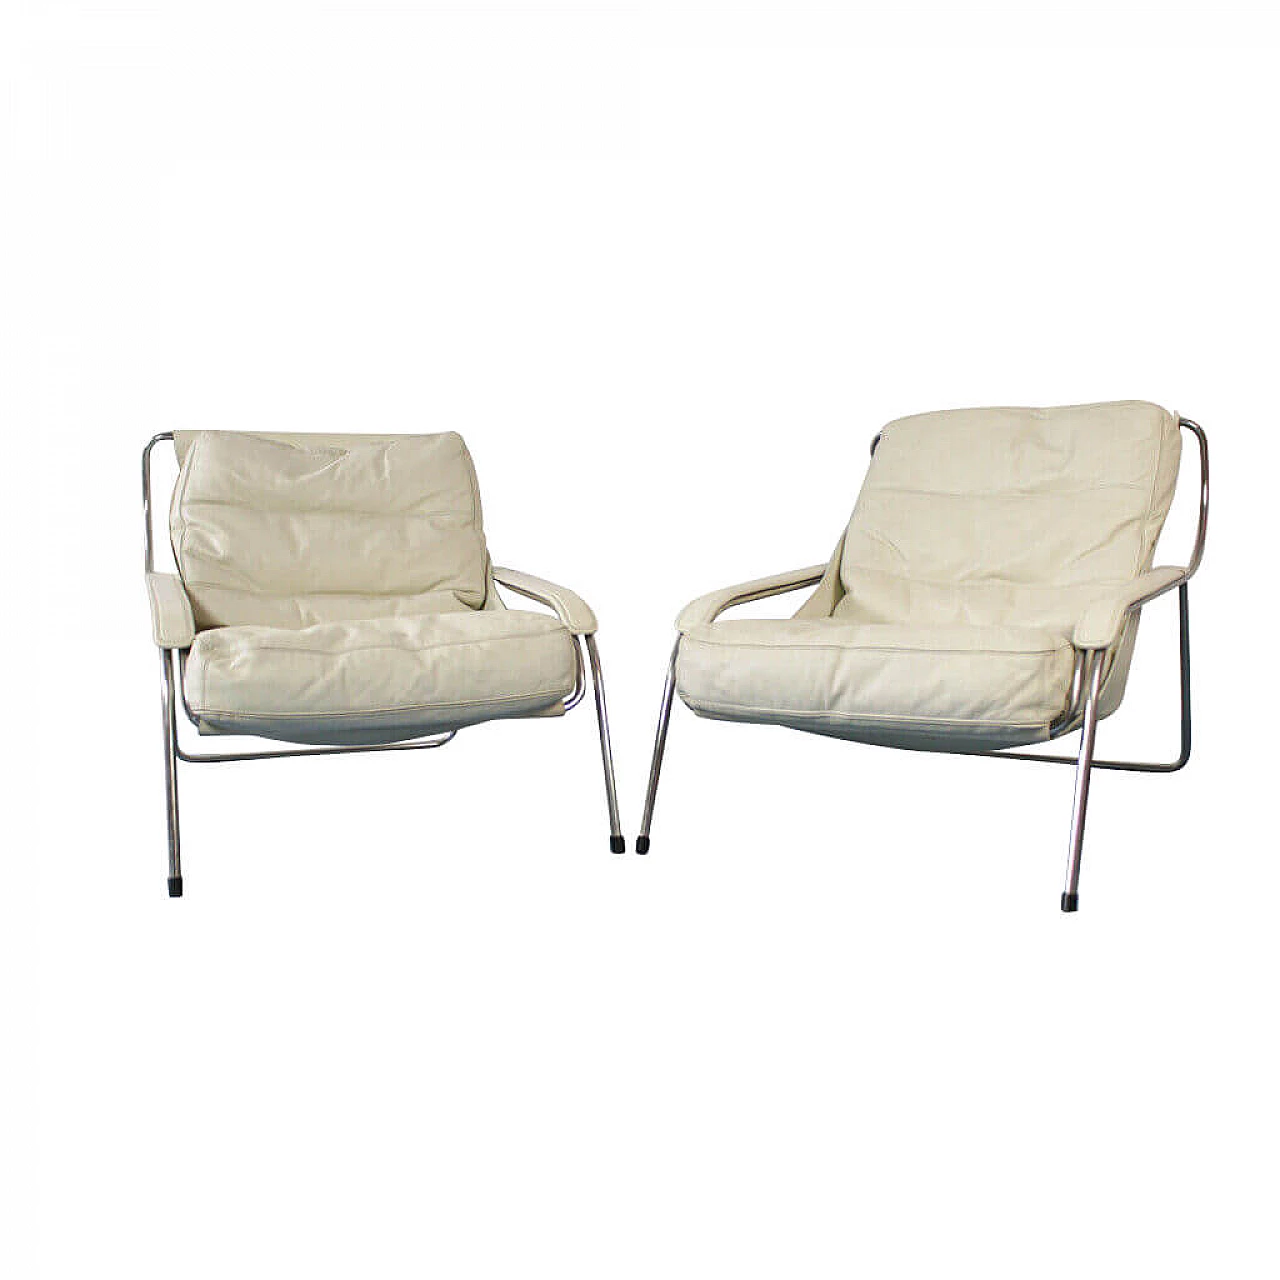 Pair of Maggiolina armchairs by Marco Zanuso for Zanotta, 1947 1118703